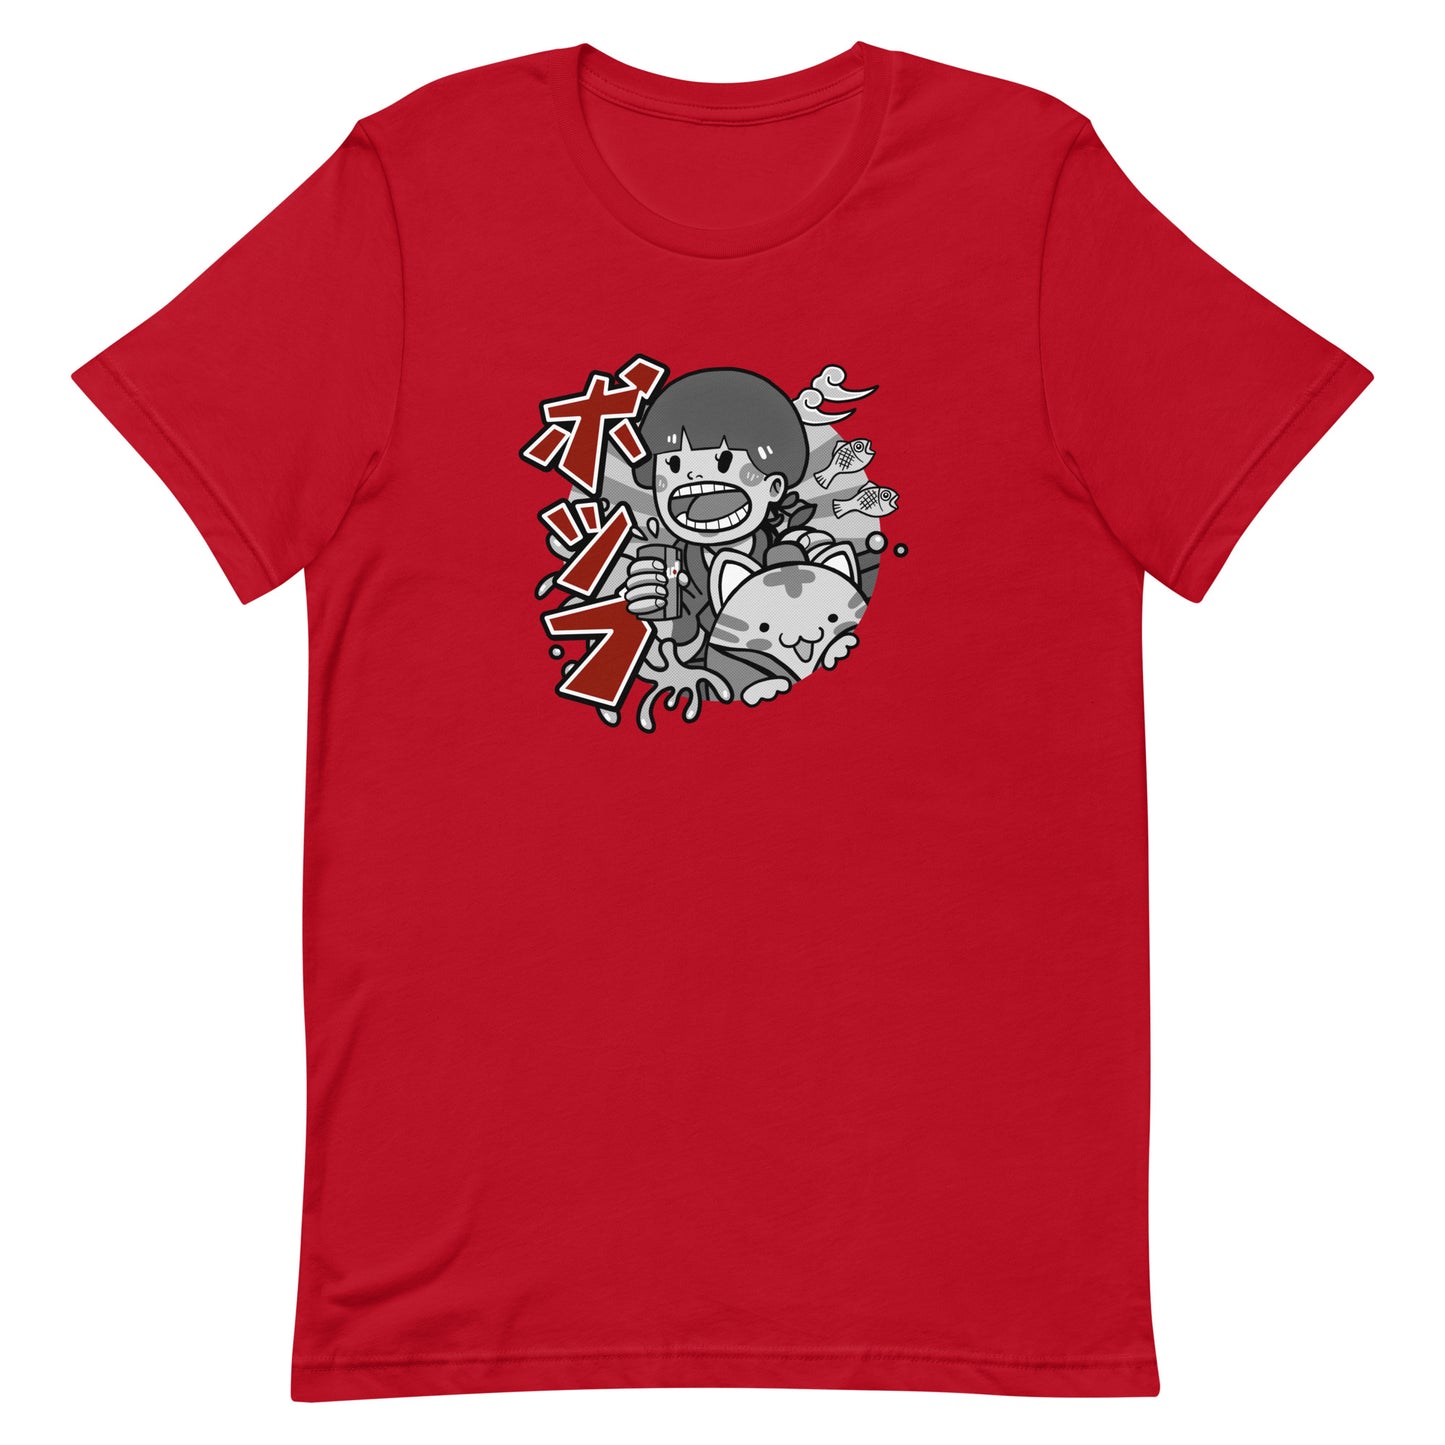 Chu-lo anime red t-shirt unisex